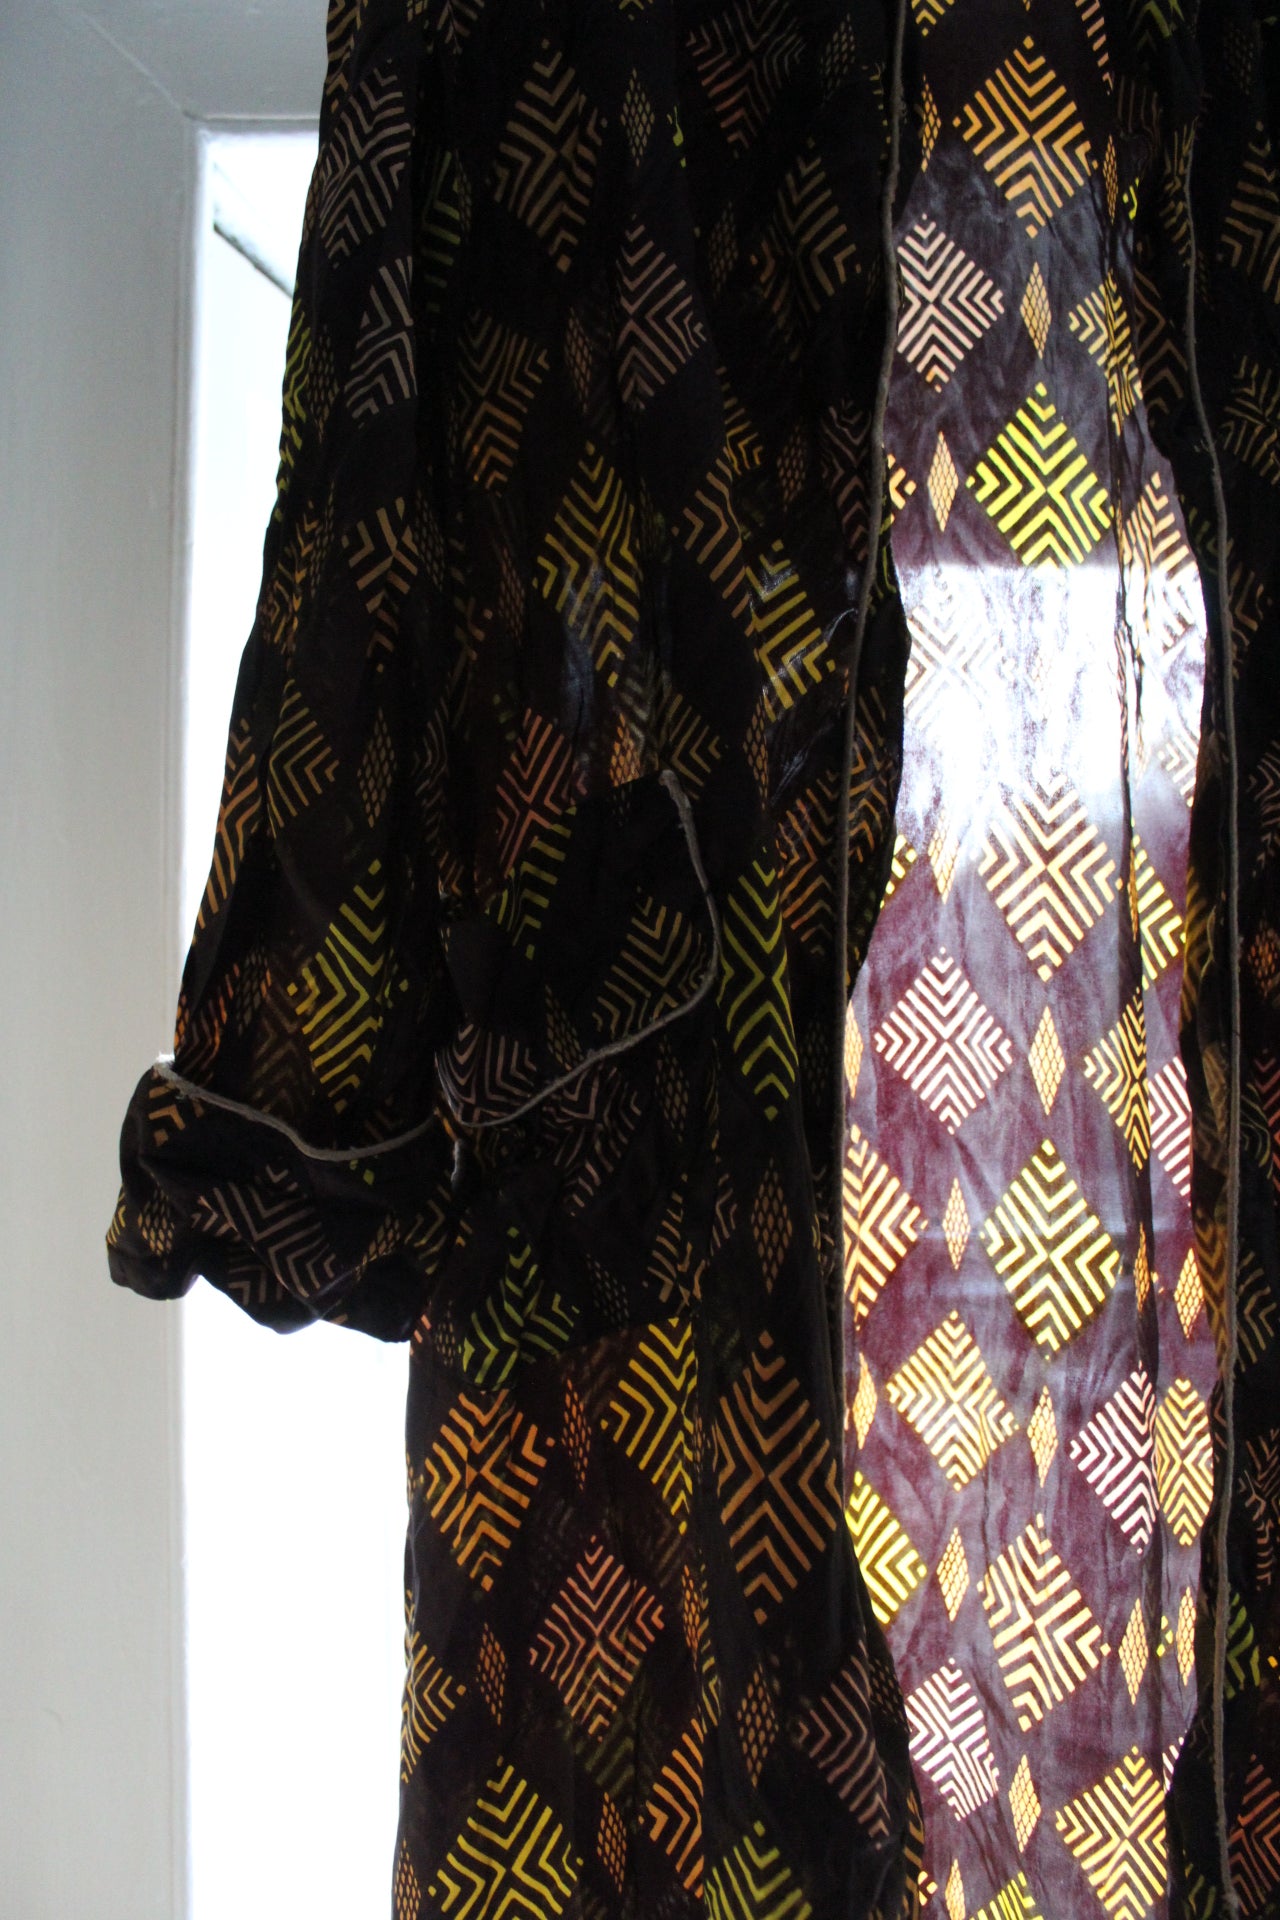 Deep purple robe with amber hexagonical embellishments